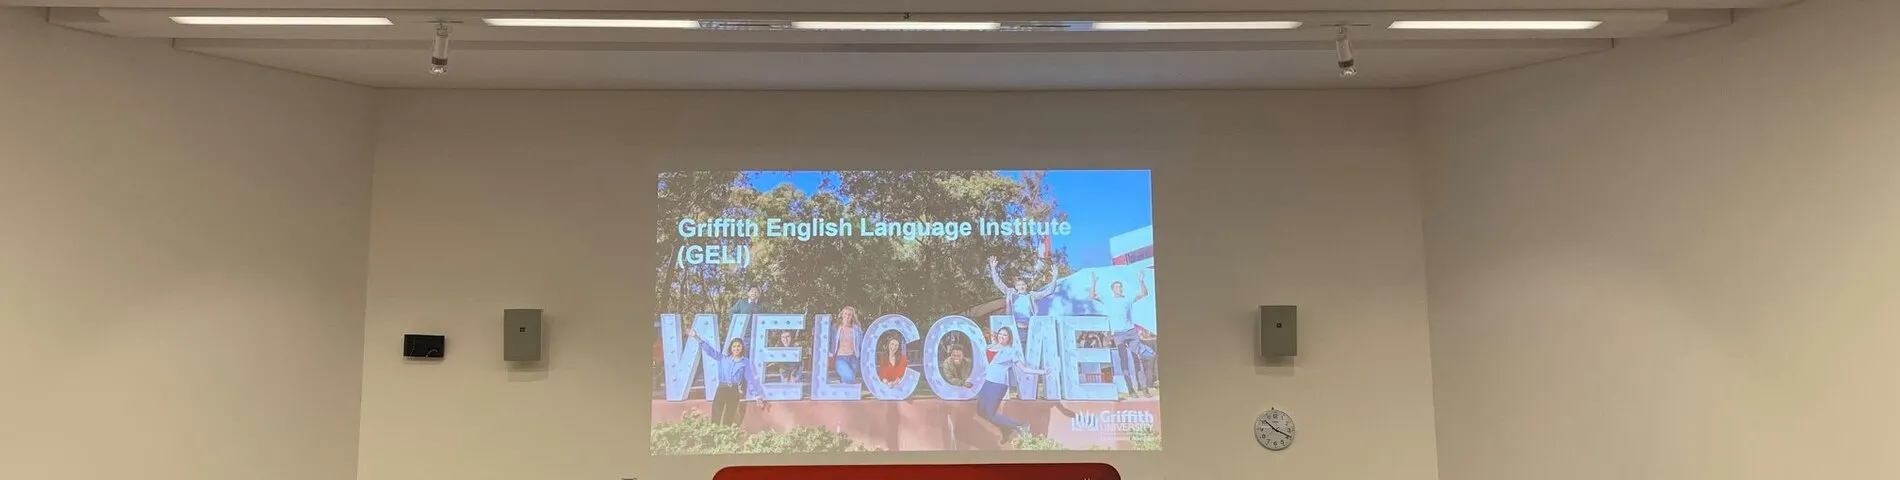 Griffith English Language Institute画像1